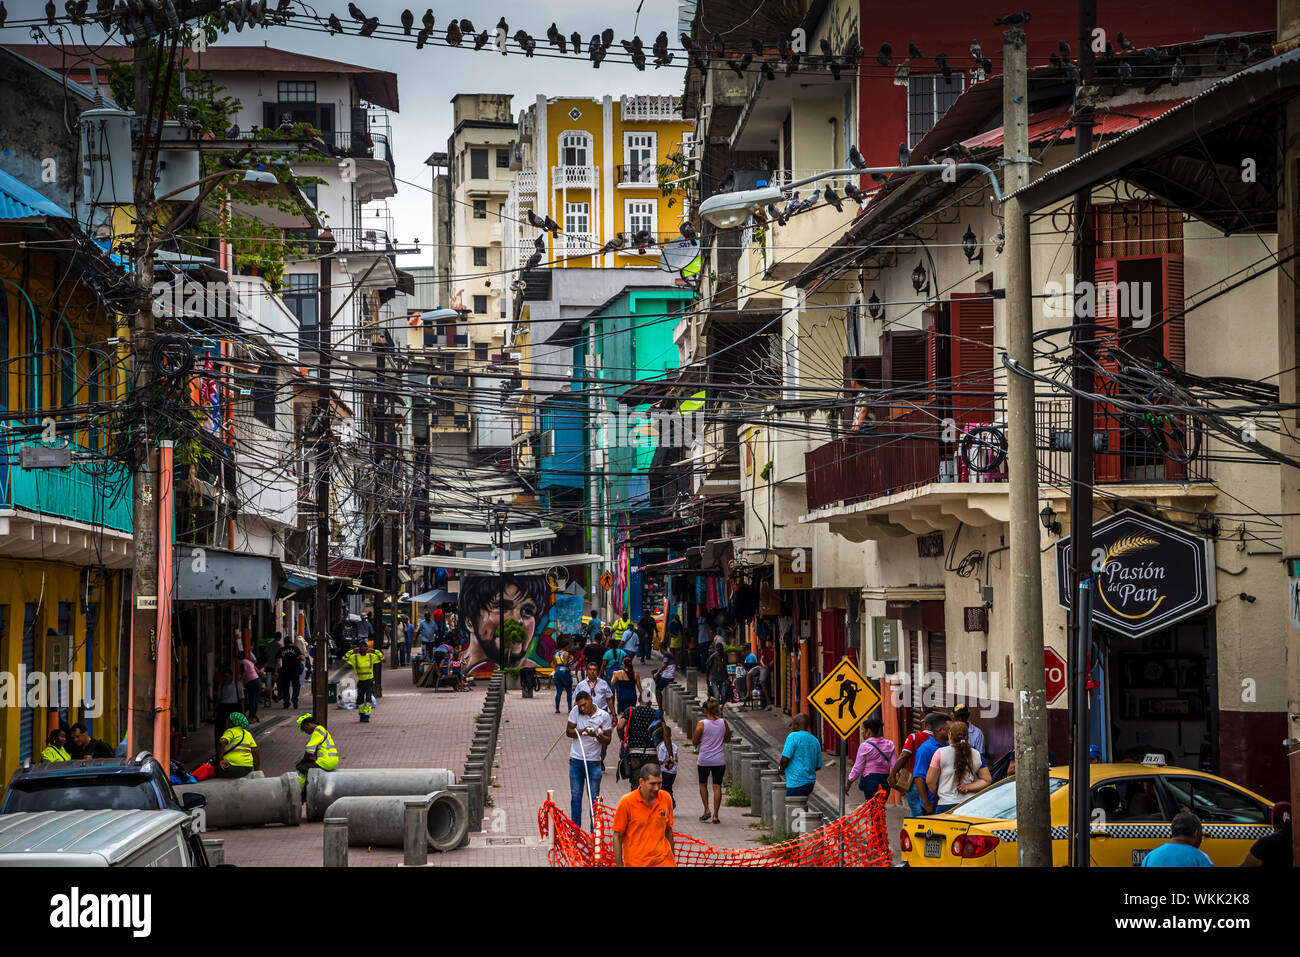 Die caotic Sal si puedes Straße in der Altstadt von Panama City, Panama Stockfoto